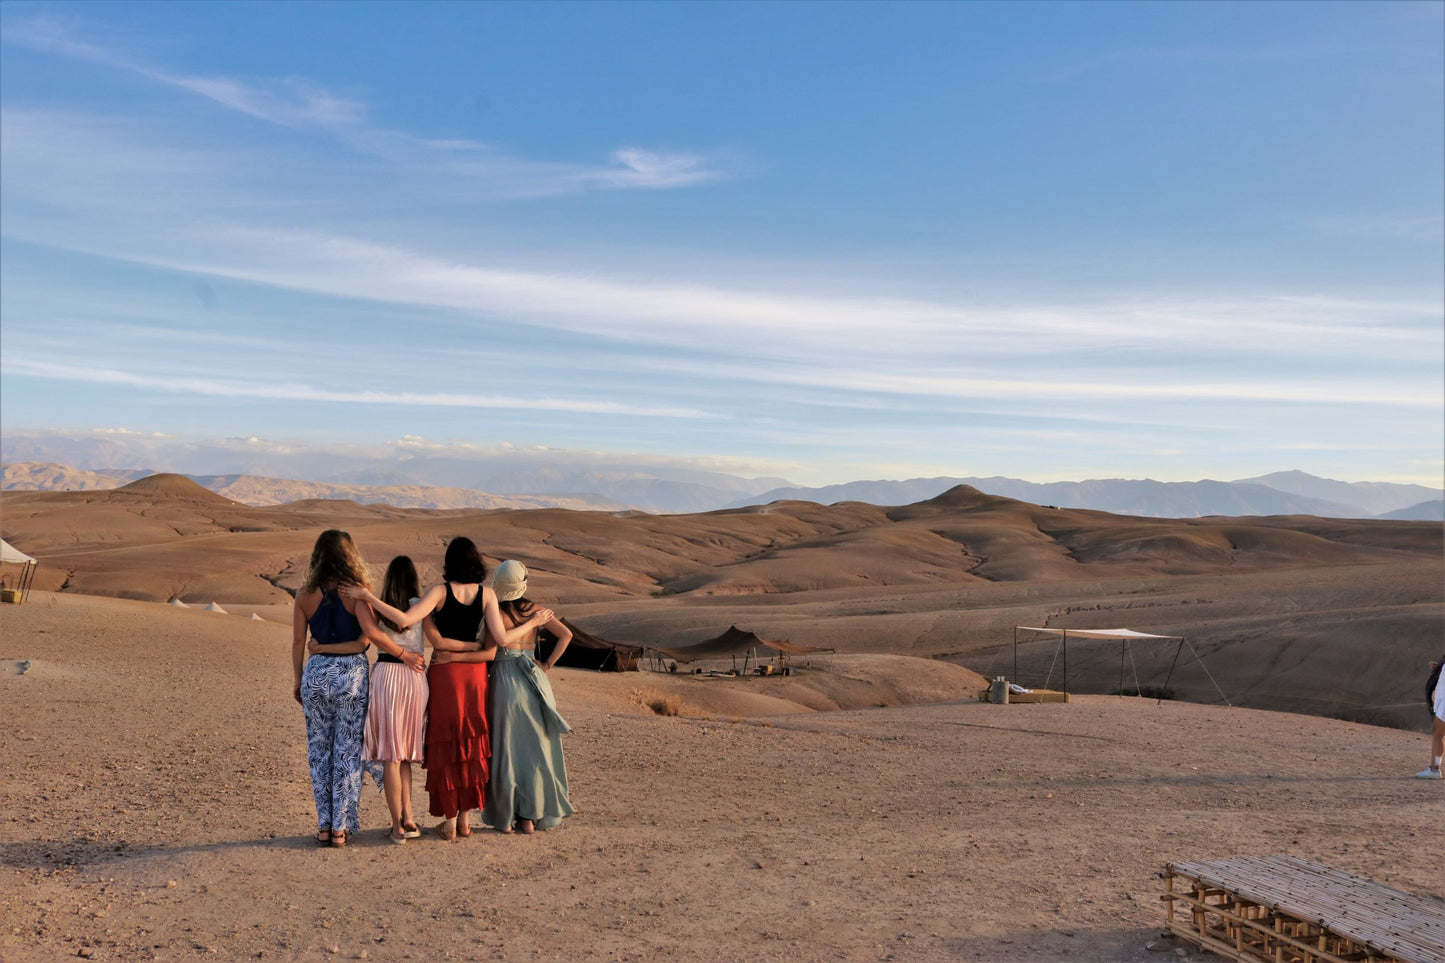 Four women in the desert holding each other